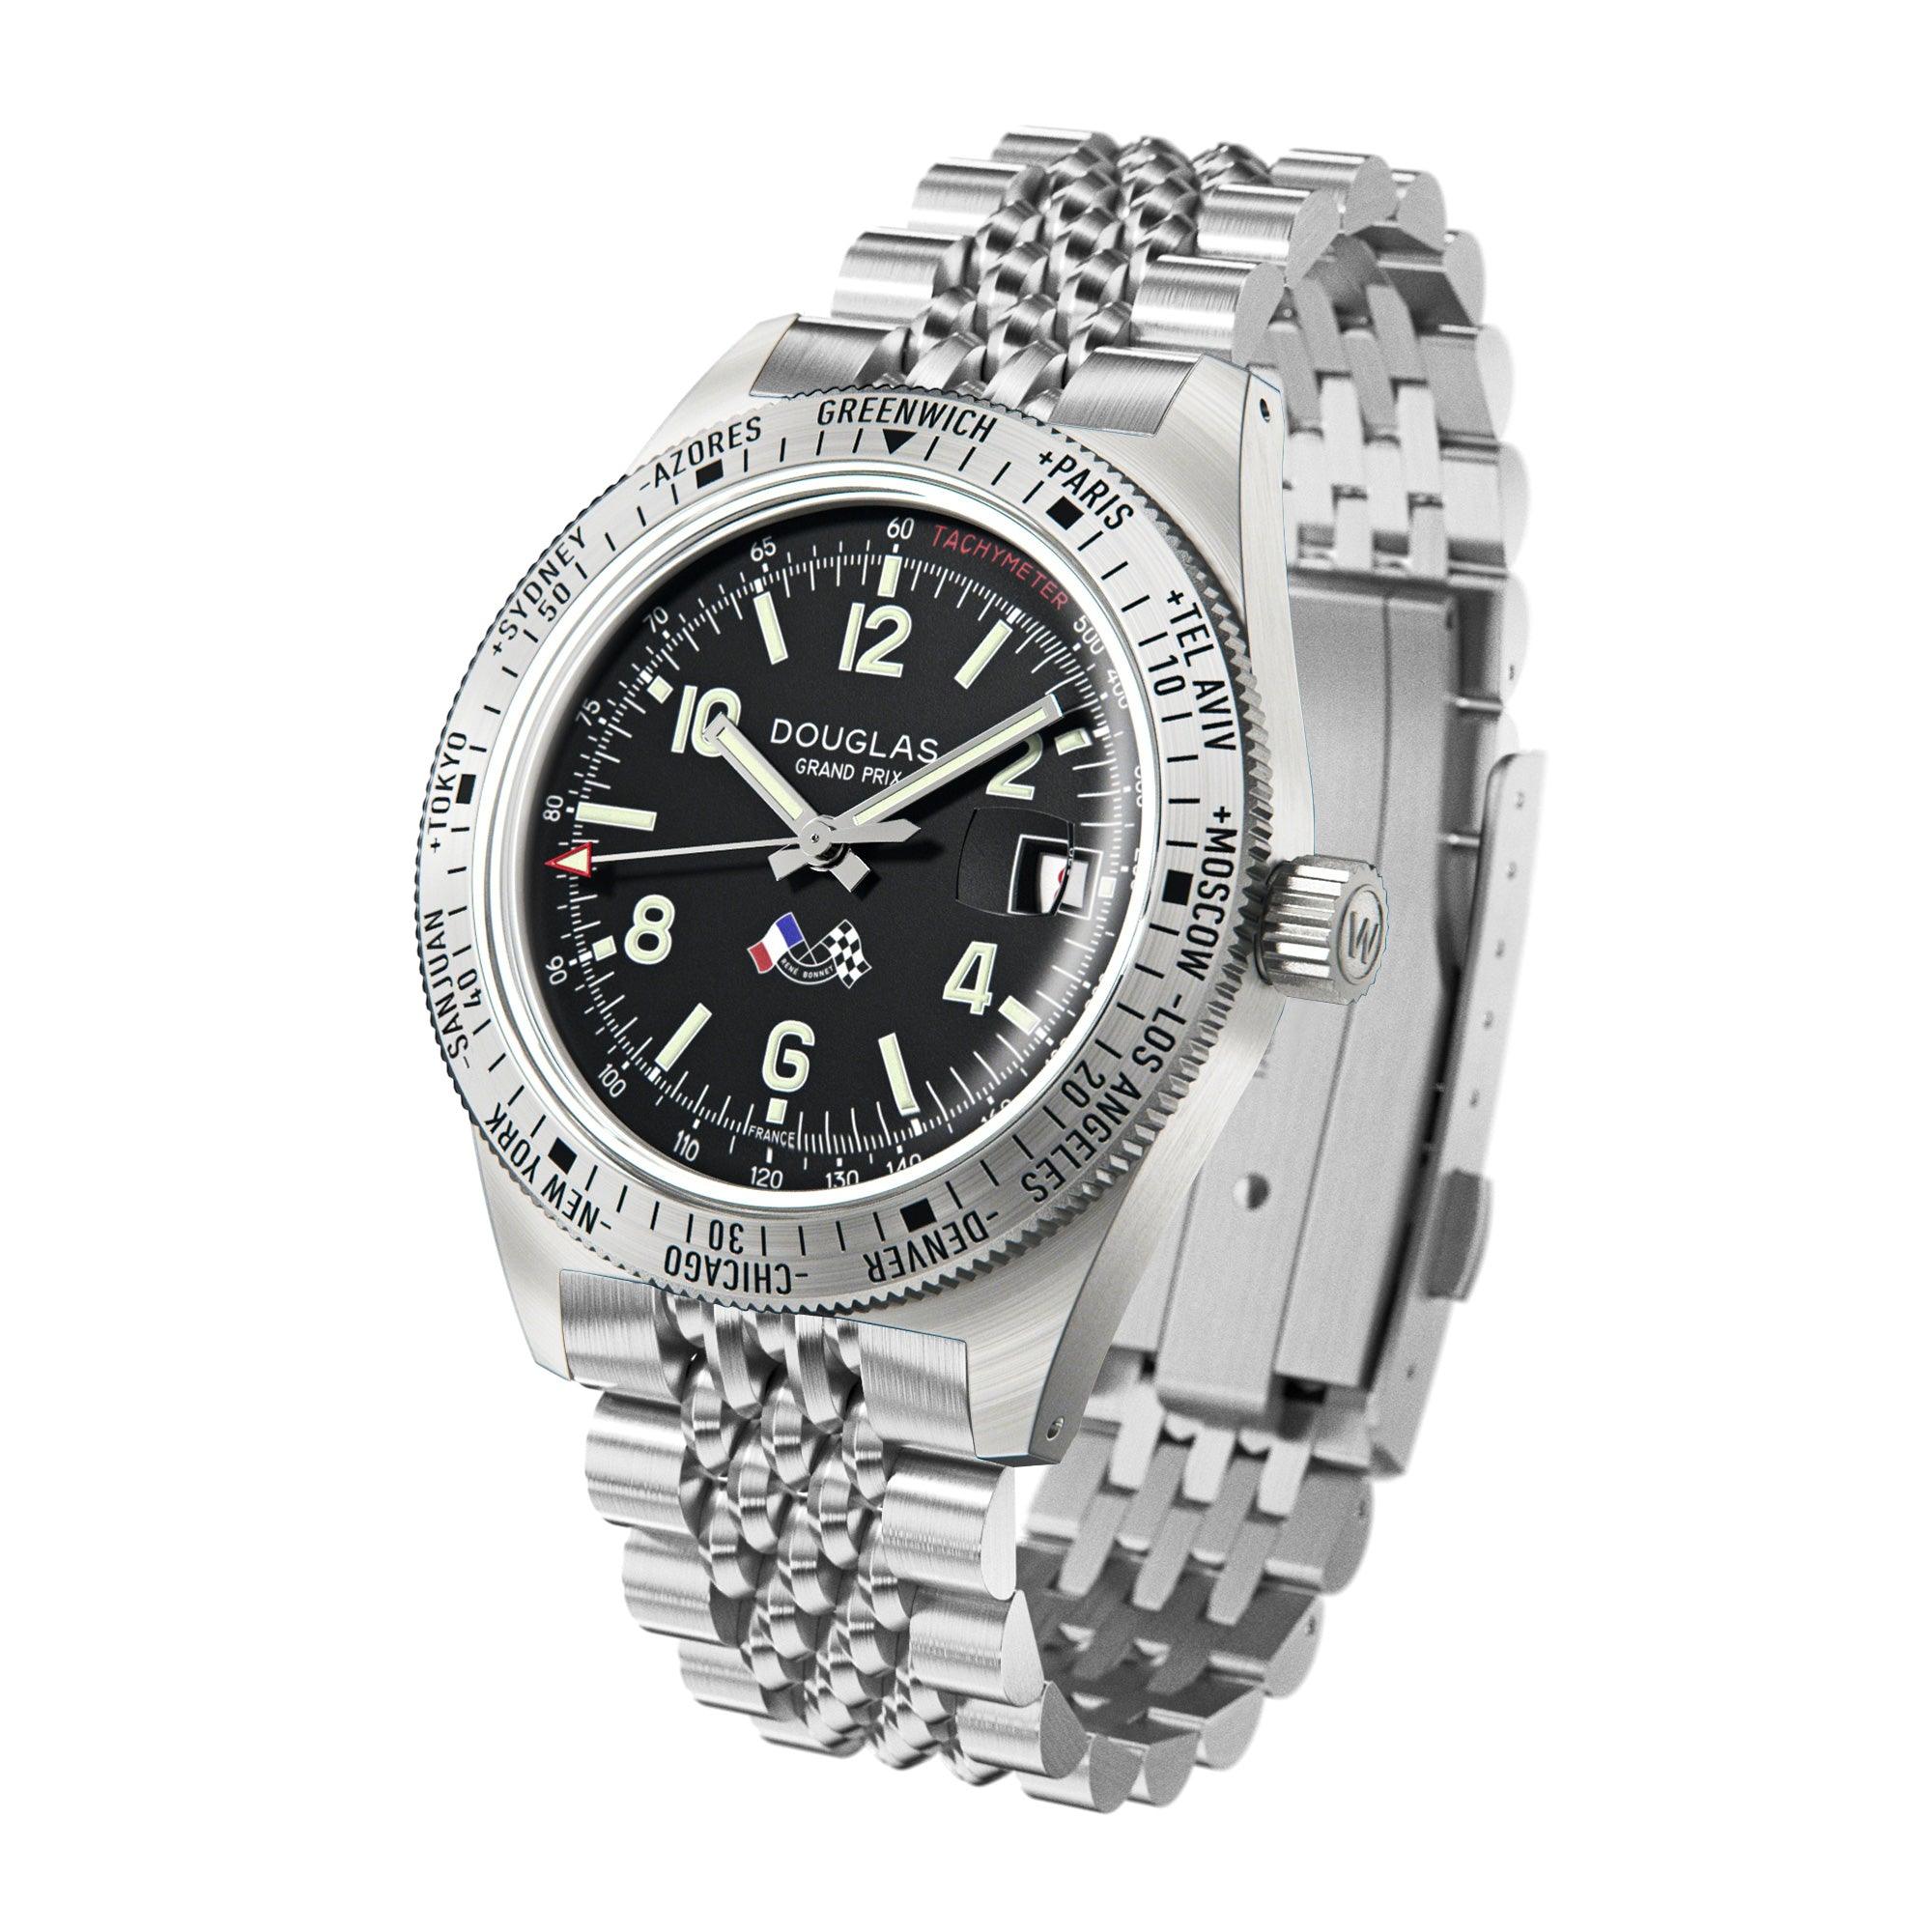 Grand Prix WT Professional Racing Watch - René Bonnet Djet 1962 Limited Edition - Wolbrook Watches